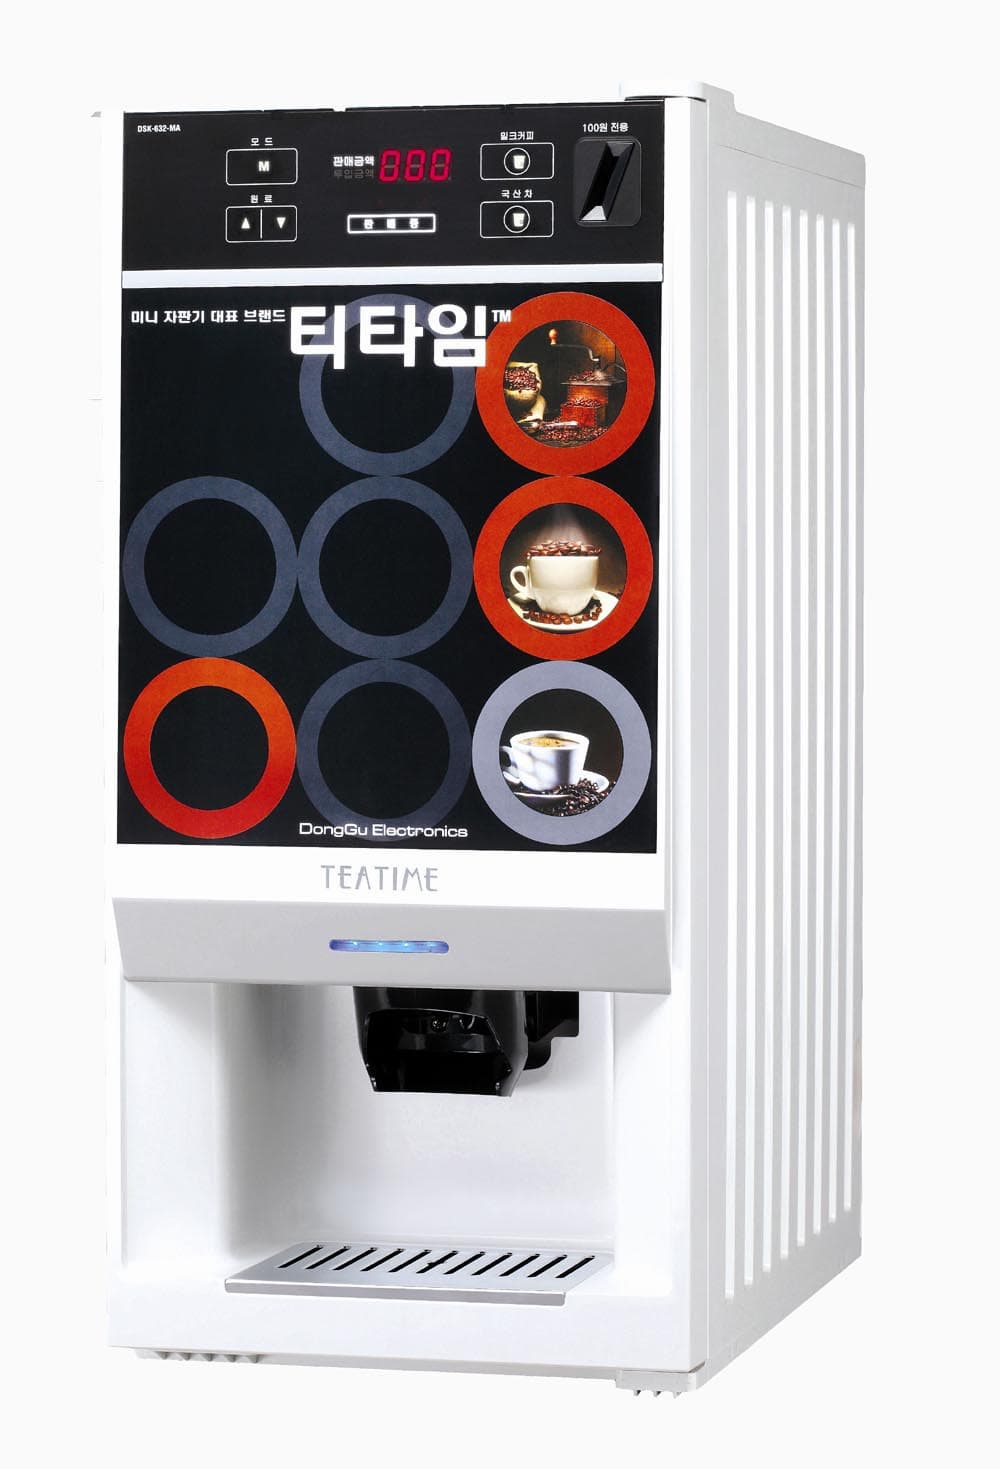 Coffee vending machine DSK-632